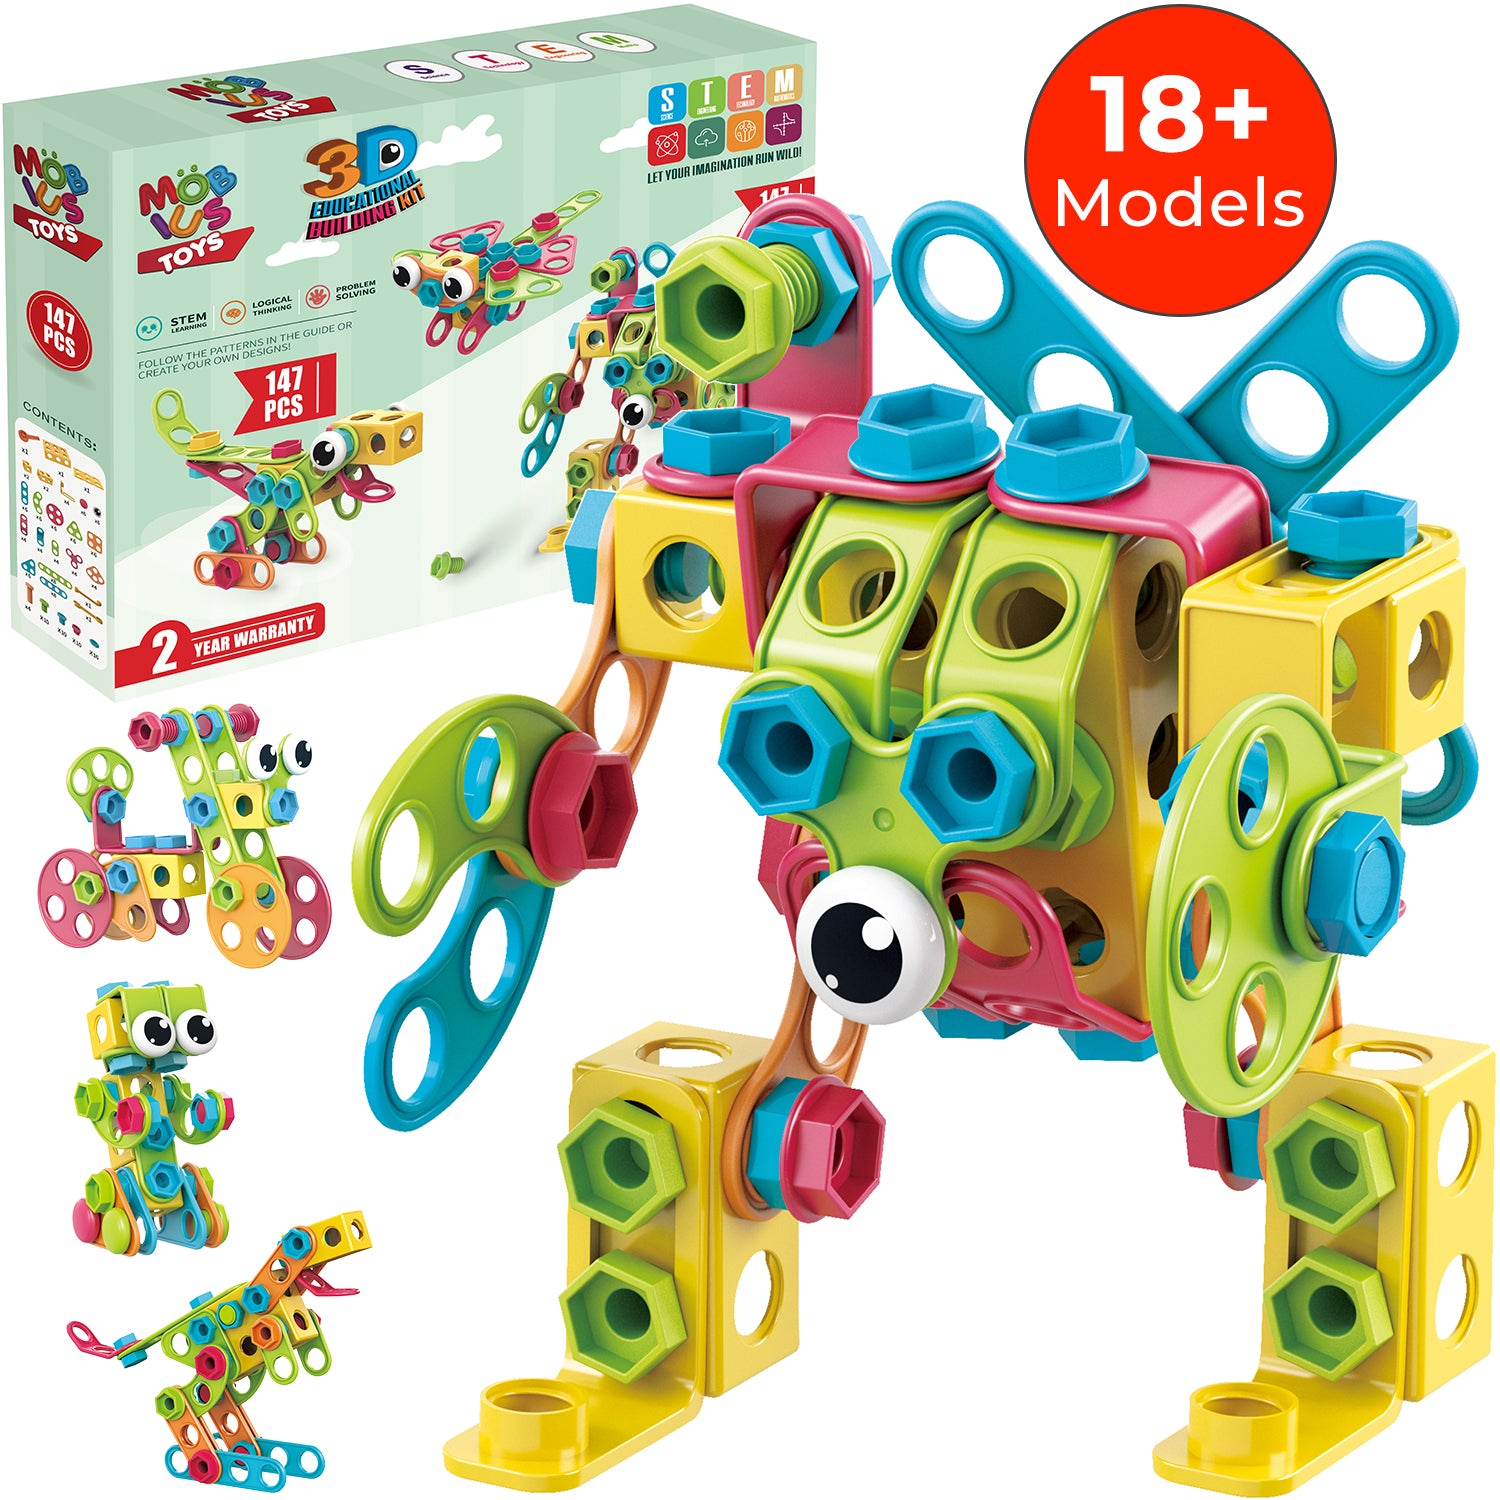 9,234 Stem Toys Images, Stock Photos, 3D objects, & Vectors